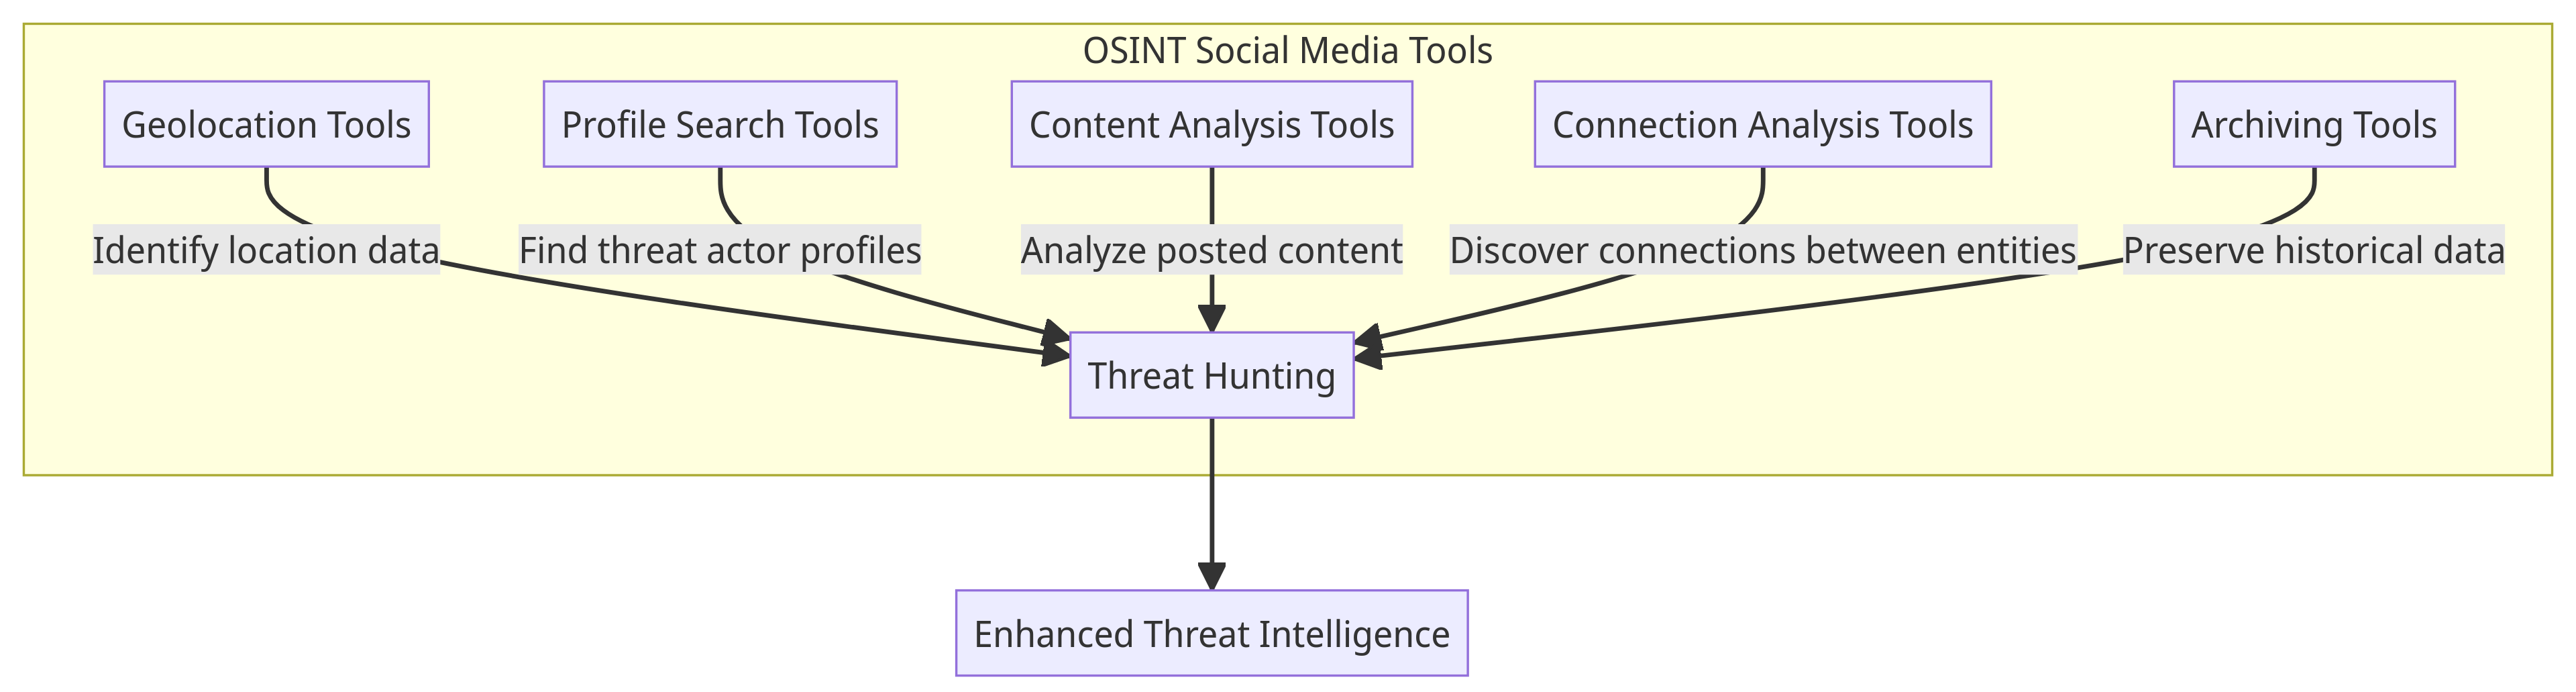 Impact of using OSINT tools for social media